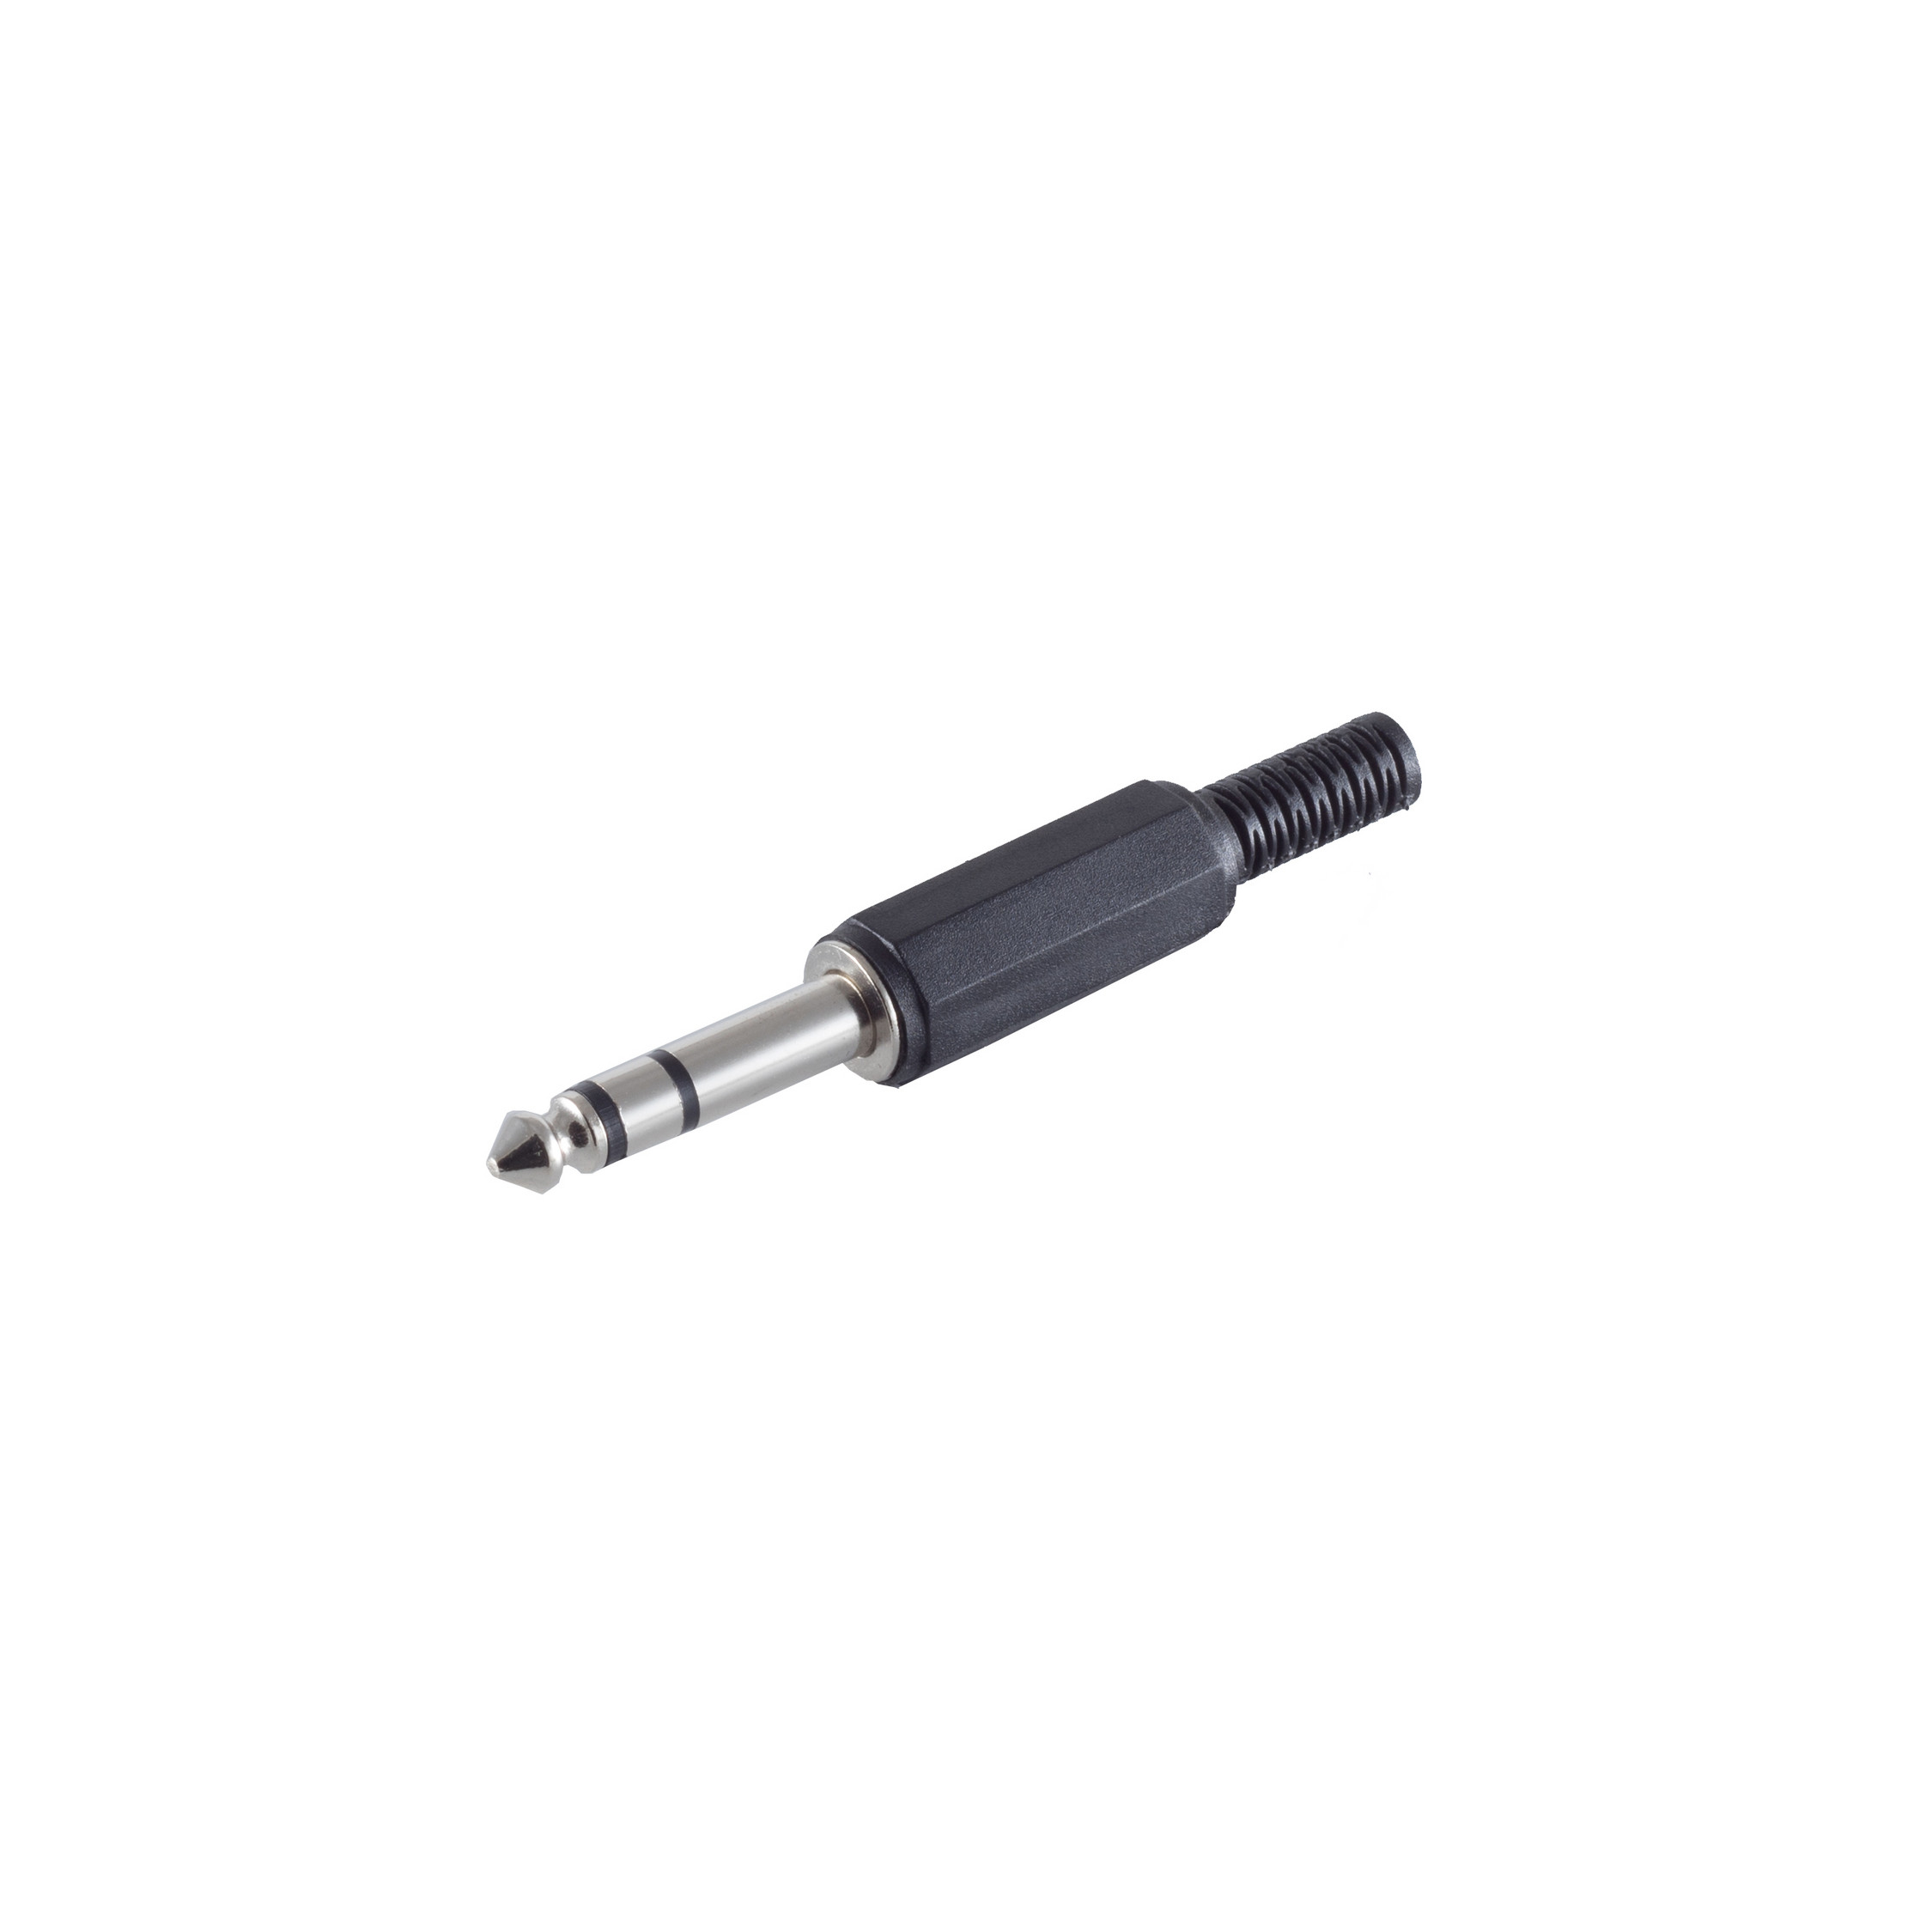 S/CONN MAXIMUM CONNECTIVITY Klinkenstecker Stereo Kabel 6,3mm Audio/Video